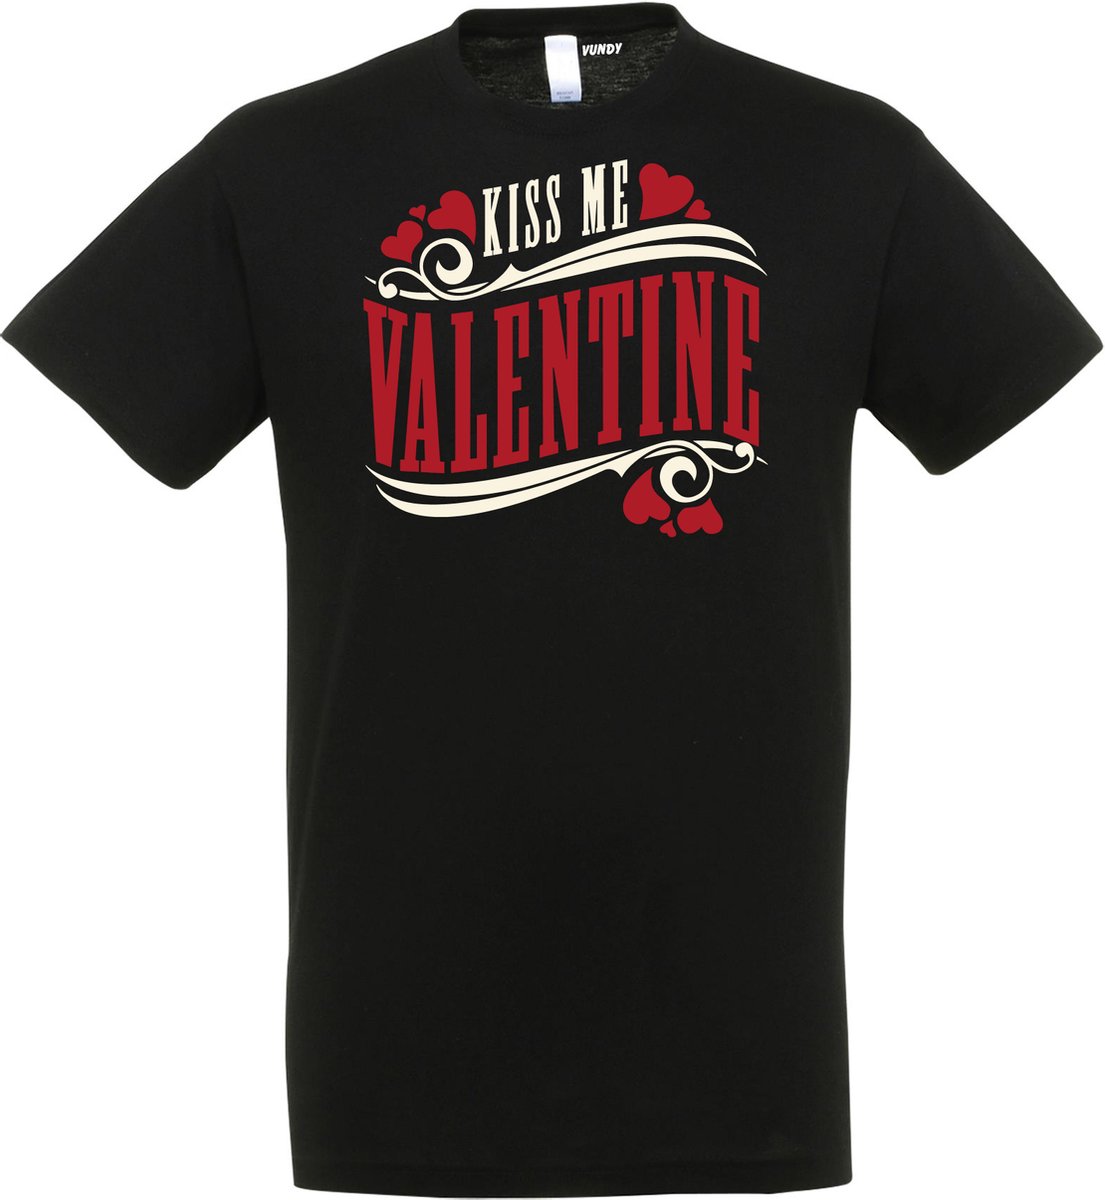 T-shirt Kiss Me Valentine | valentijn cadeautje voor hem haar | valentijn | valentijnsdag cadeau | Zwart | maat 4XL